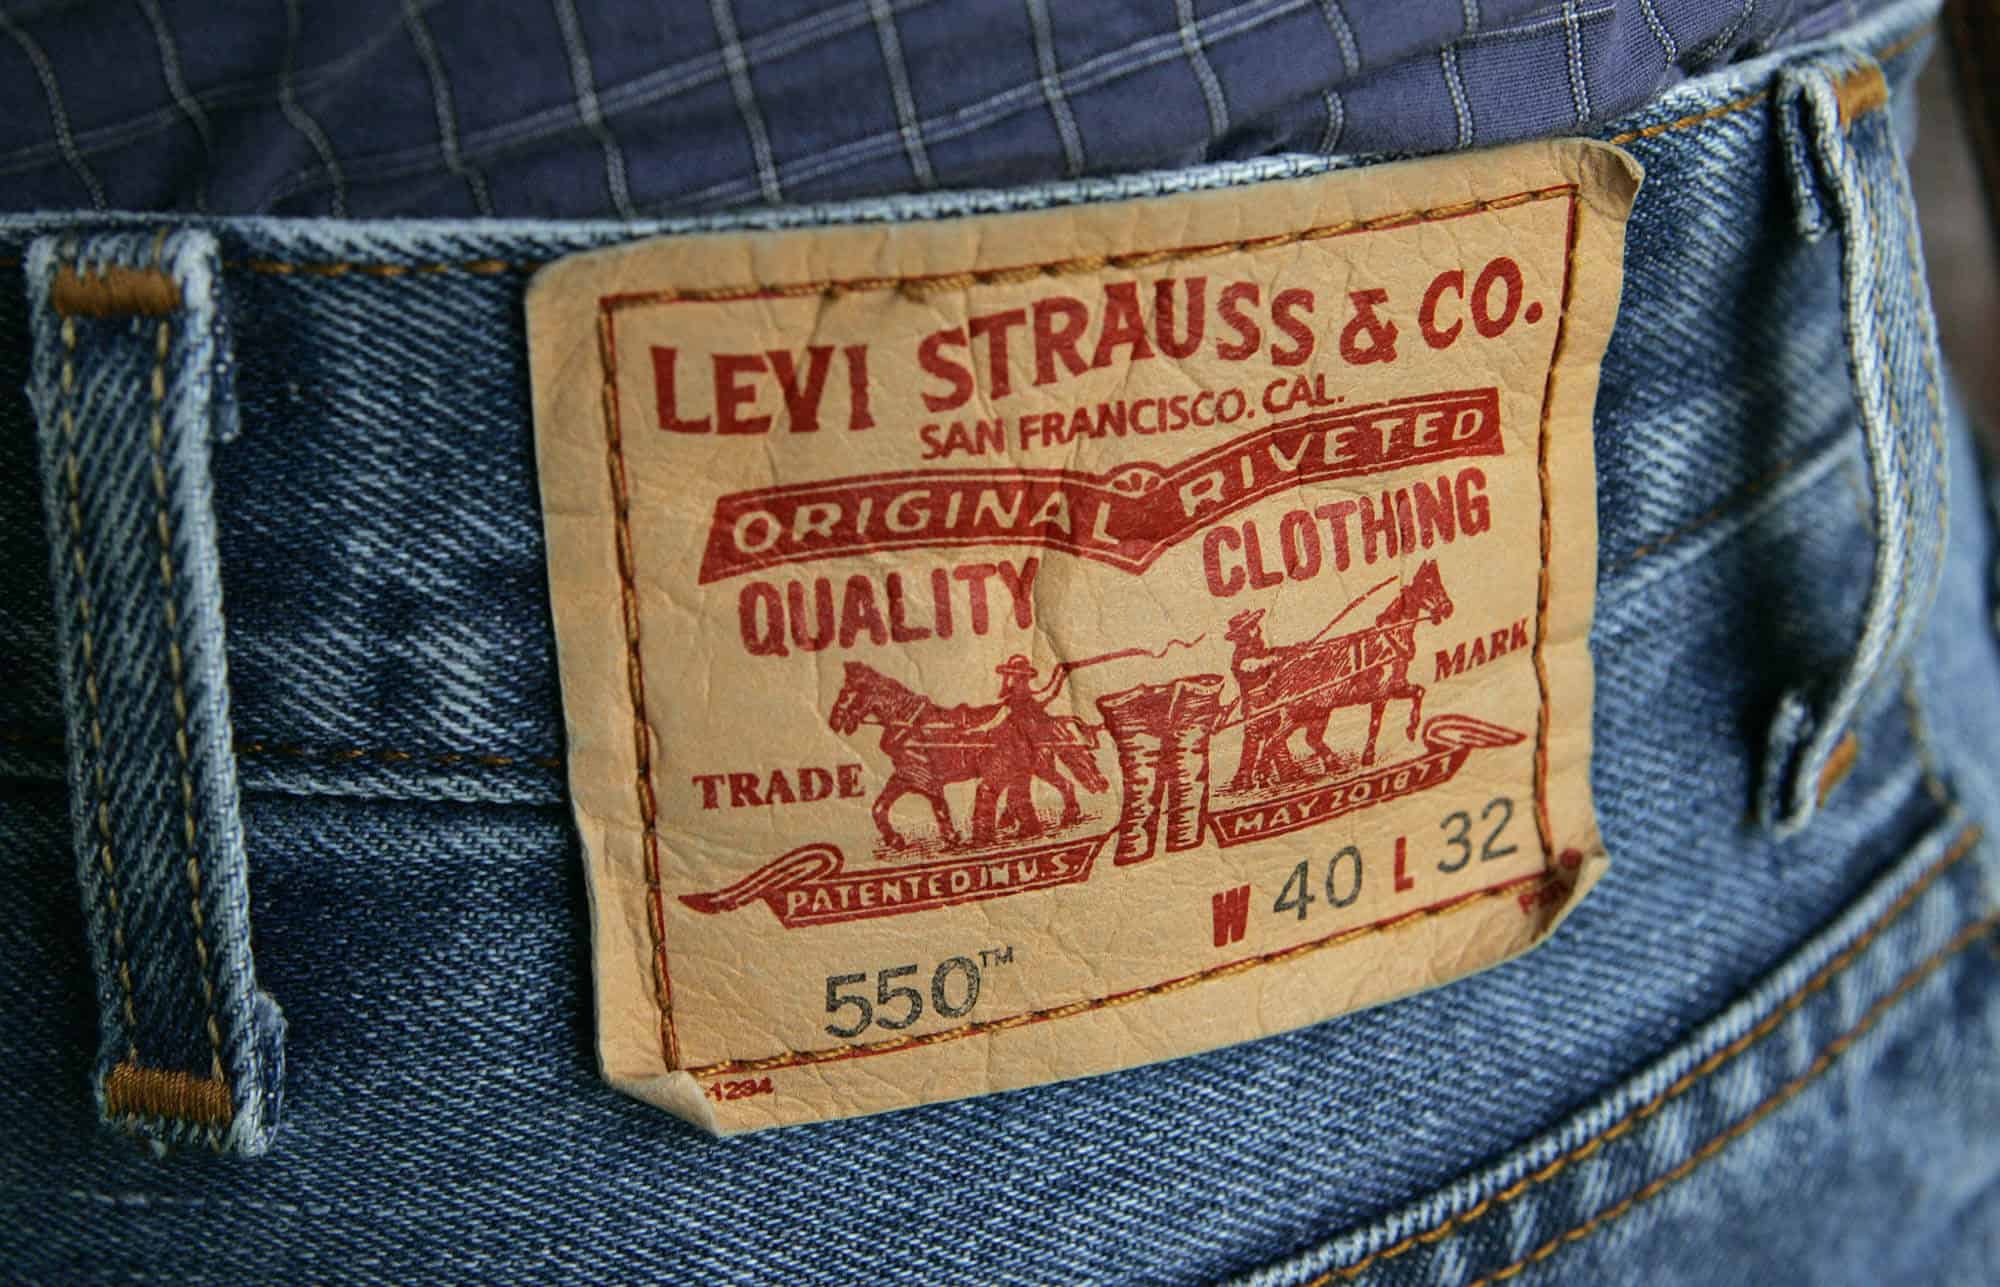 levi's clothing brand